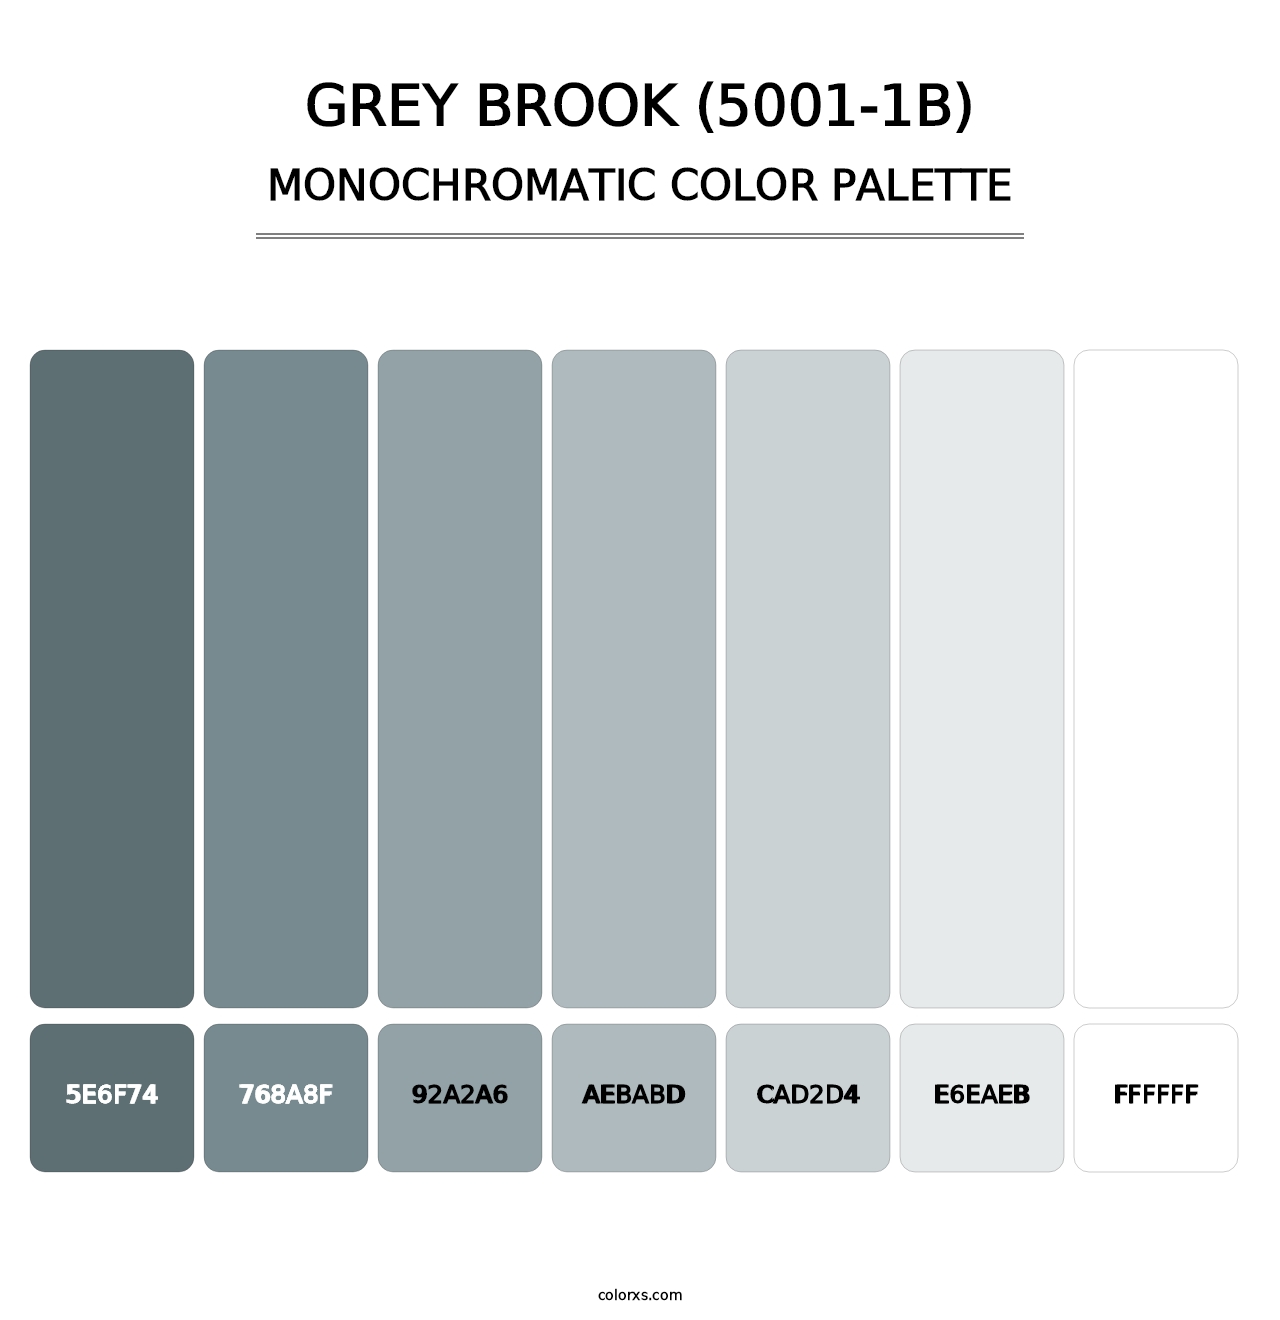 Grey Brook (5001-1B) - Monochromatic Color Palette